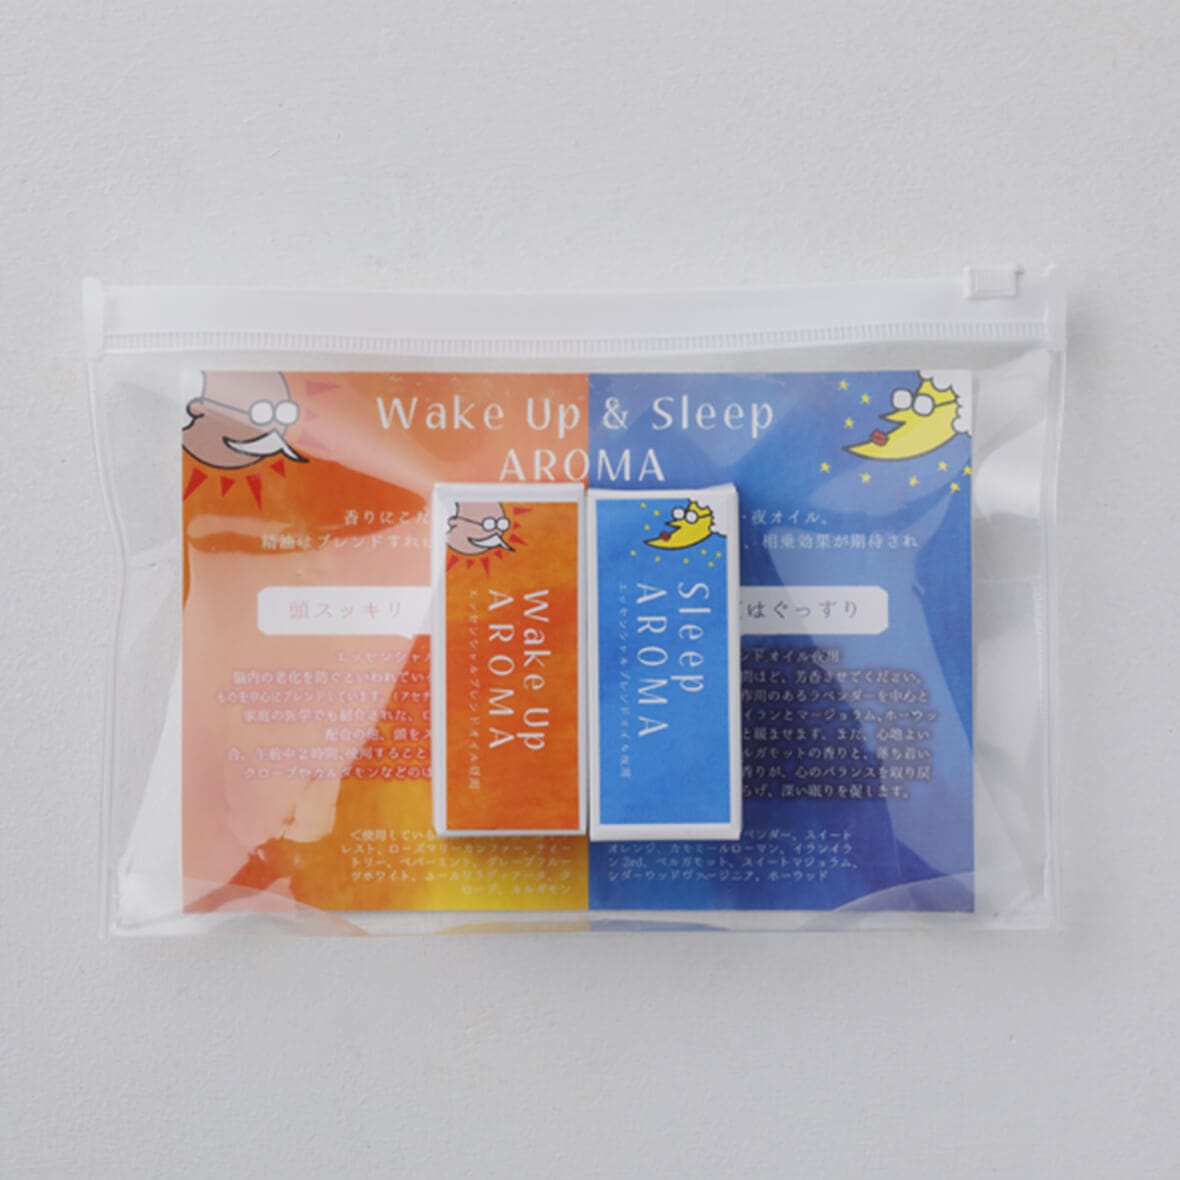 WakeUp & Sleep Aroma 2 件套